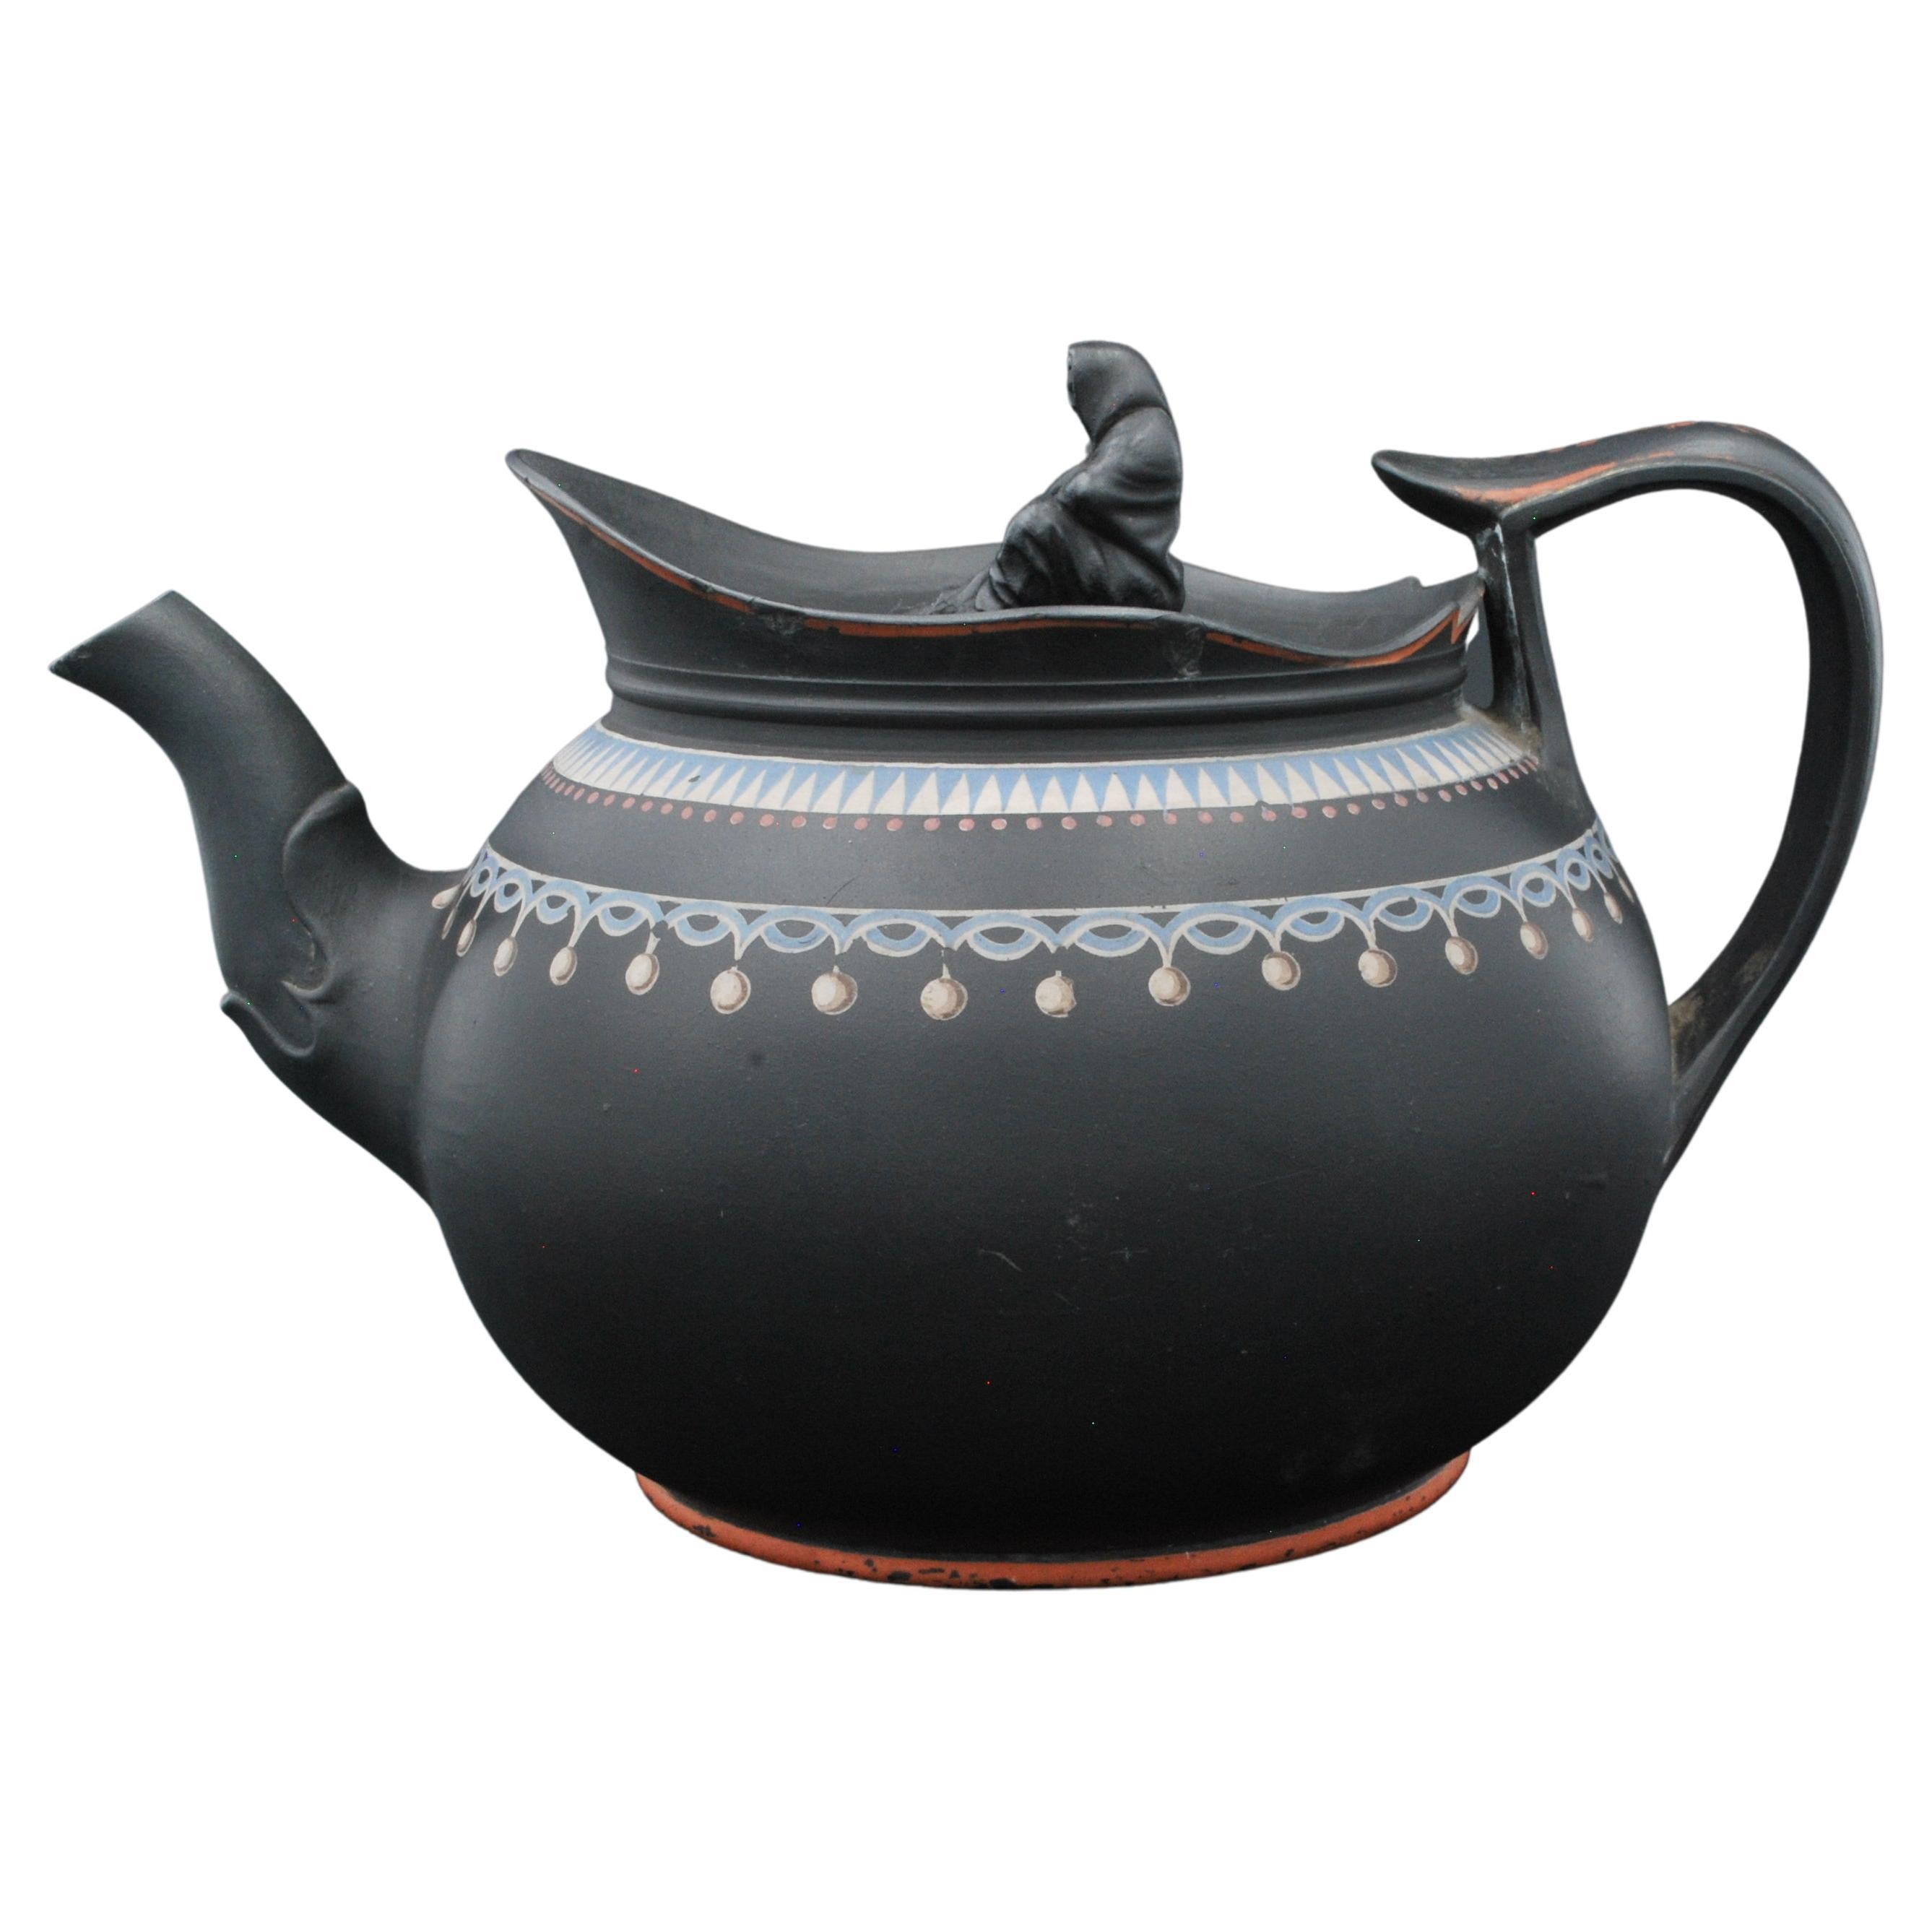 Black Basalt Teapot with Enamel Decoration, Probably Spode C1800 For Sale